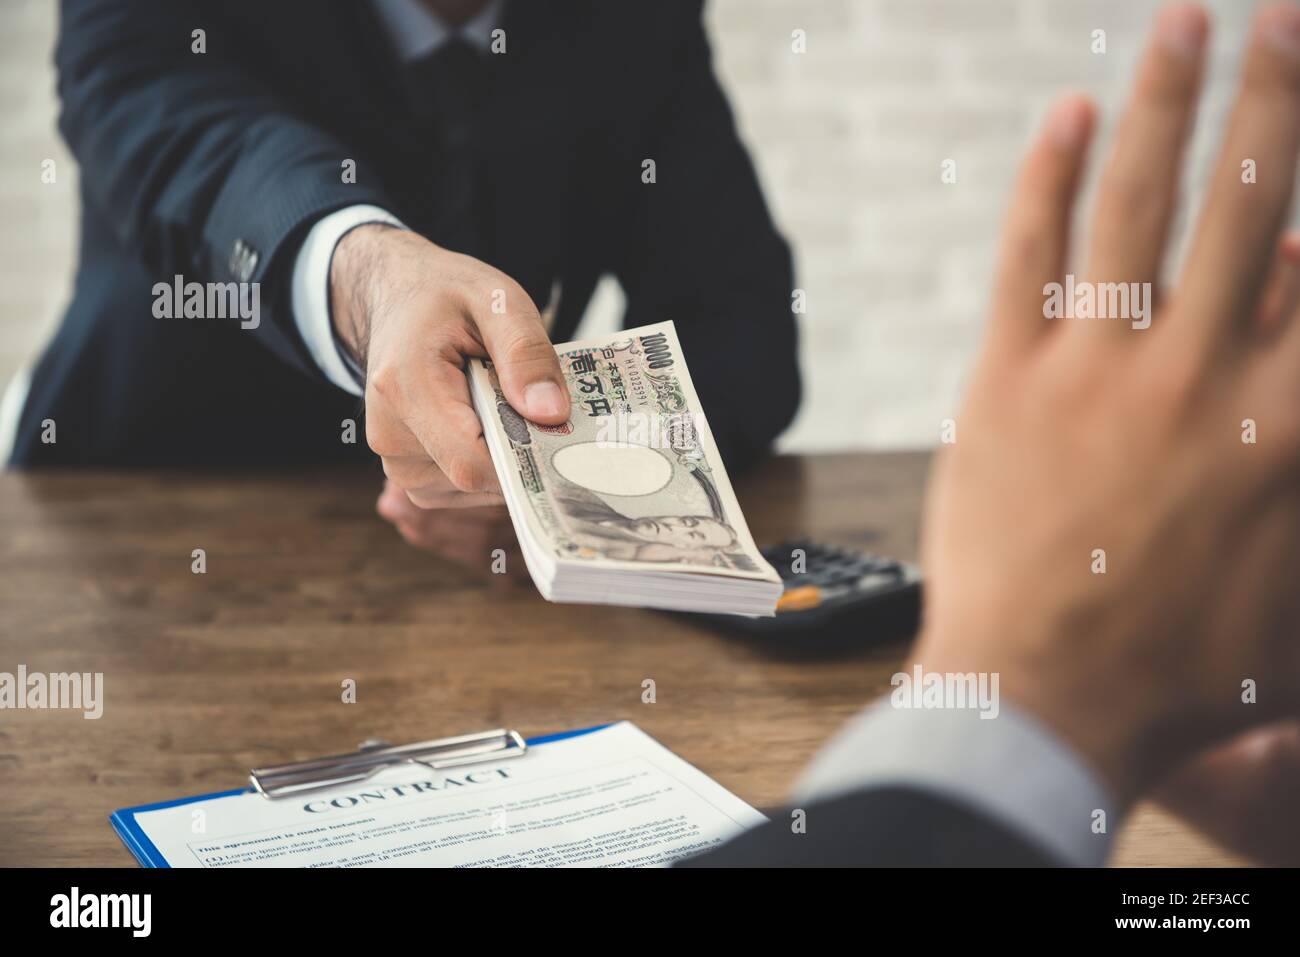 Businessman refusing money, Japanese yen bills - anti bribery and corruption concepts Stock Photo